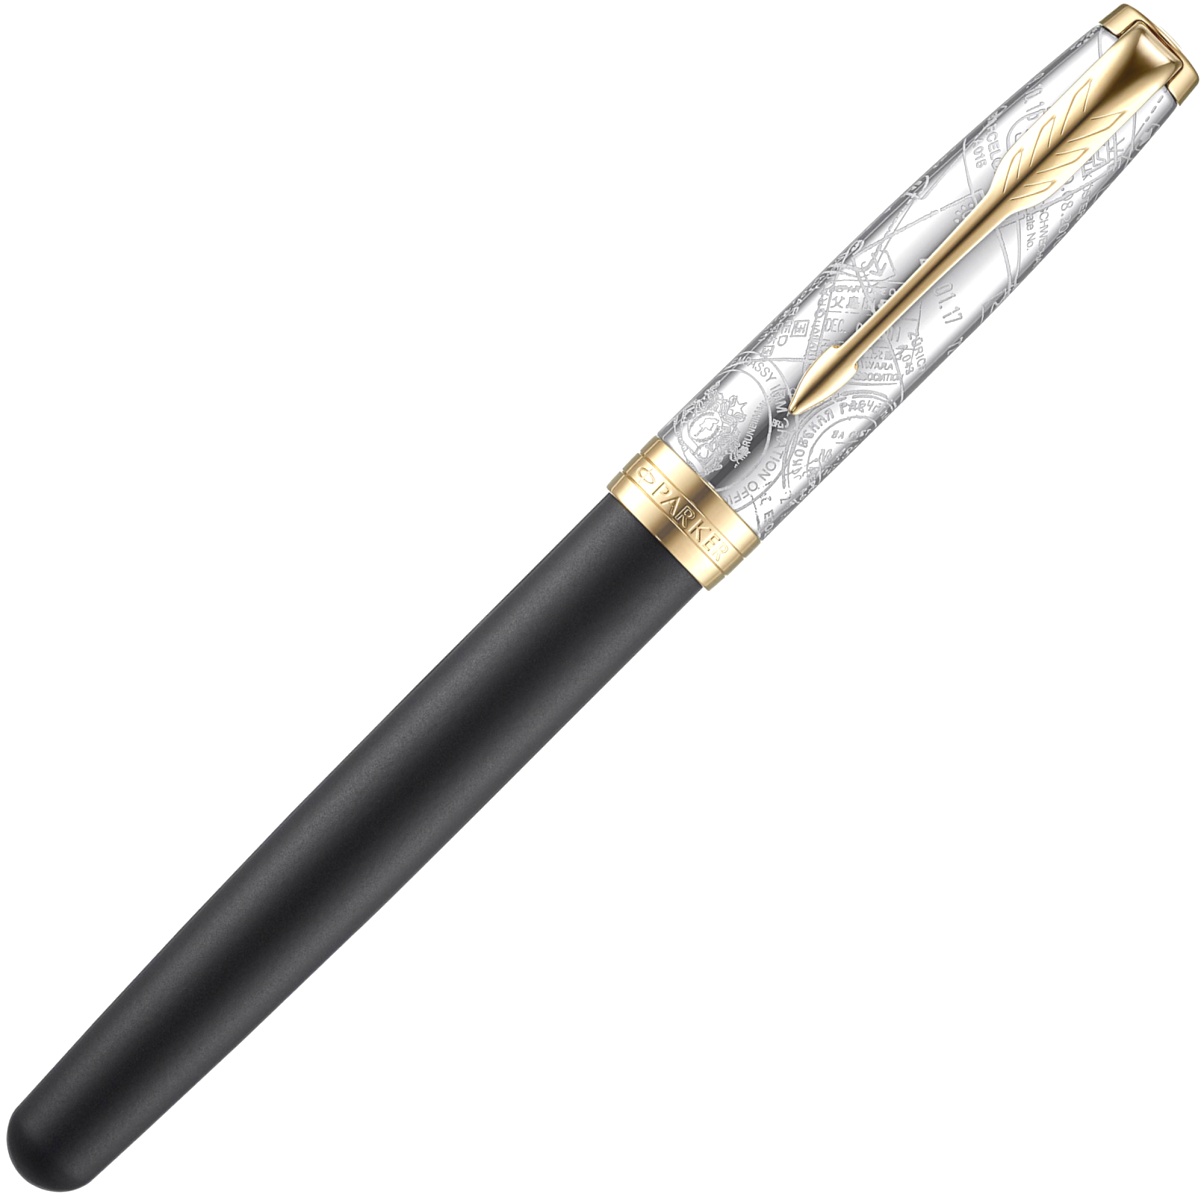  Перьевая ручка Parker Sonnet Impression SE18 F541, Matte Black GT (Перо F), фото 2